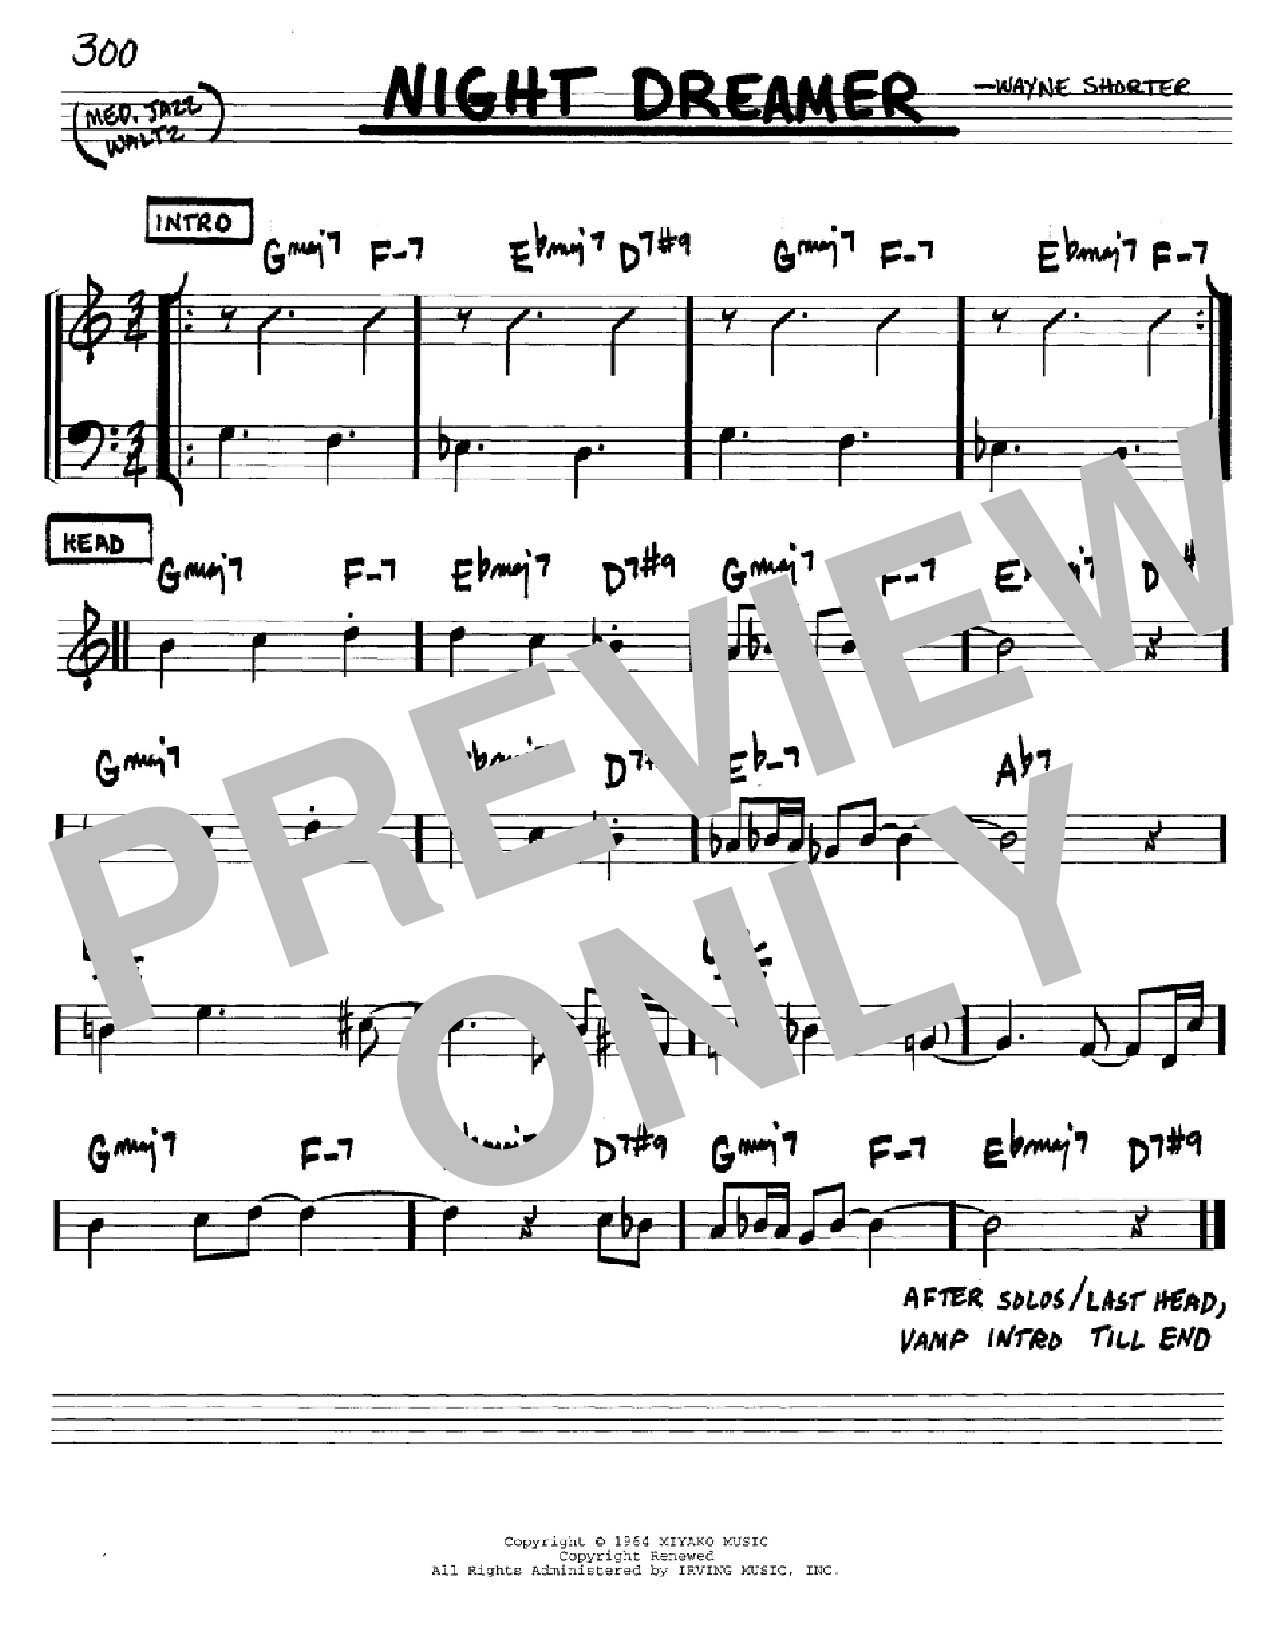 Wayne Shorter Night Dreamer sheet music notes and chords arranged for Tenor Sax Transcription